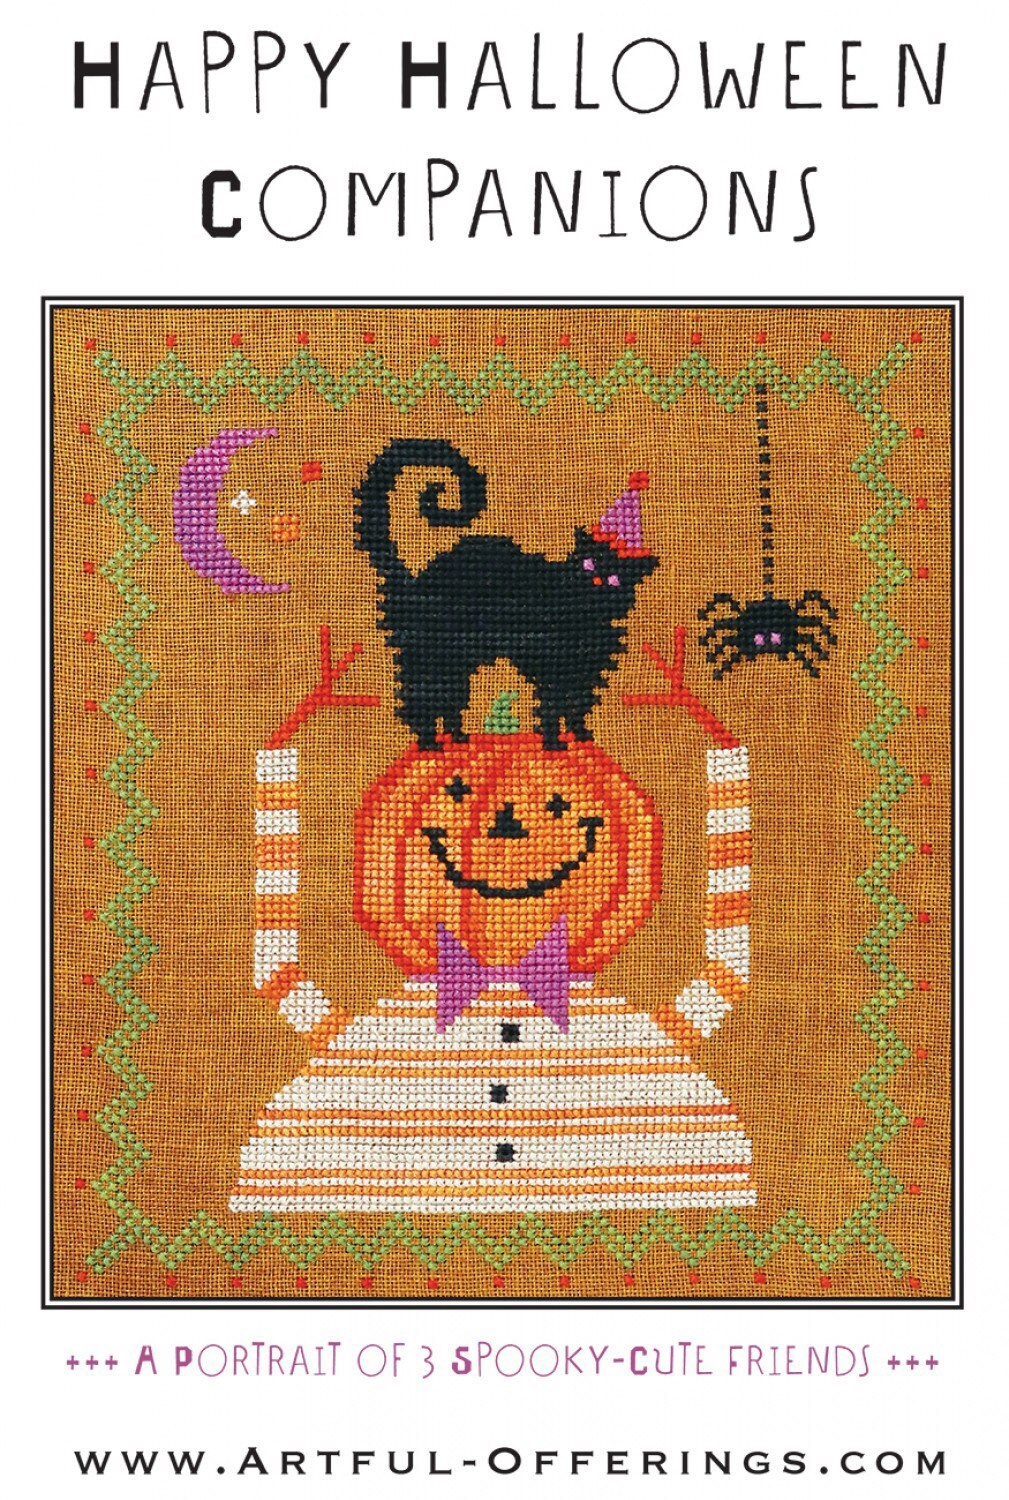 Happy Halloween Companions Cross Stitch Pattern - Artful Offerings - Karina Hittle